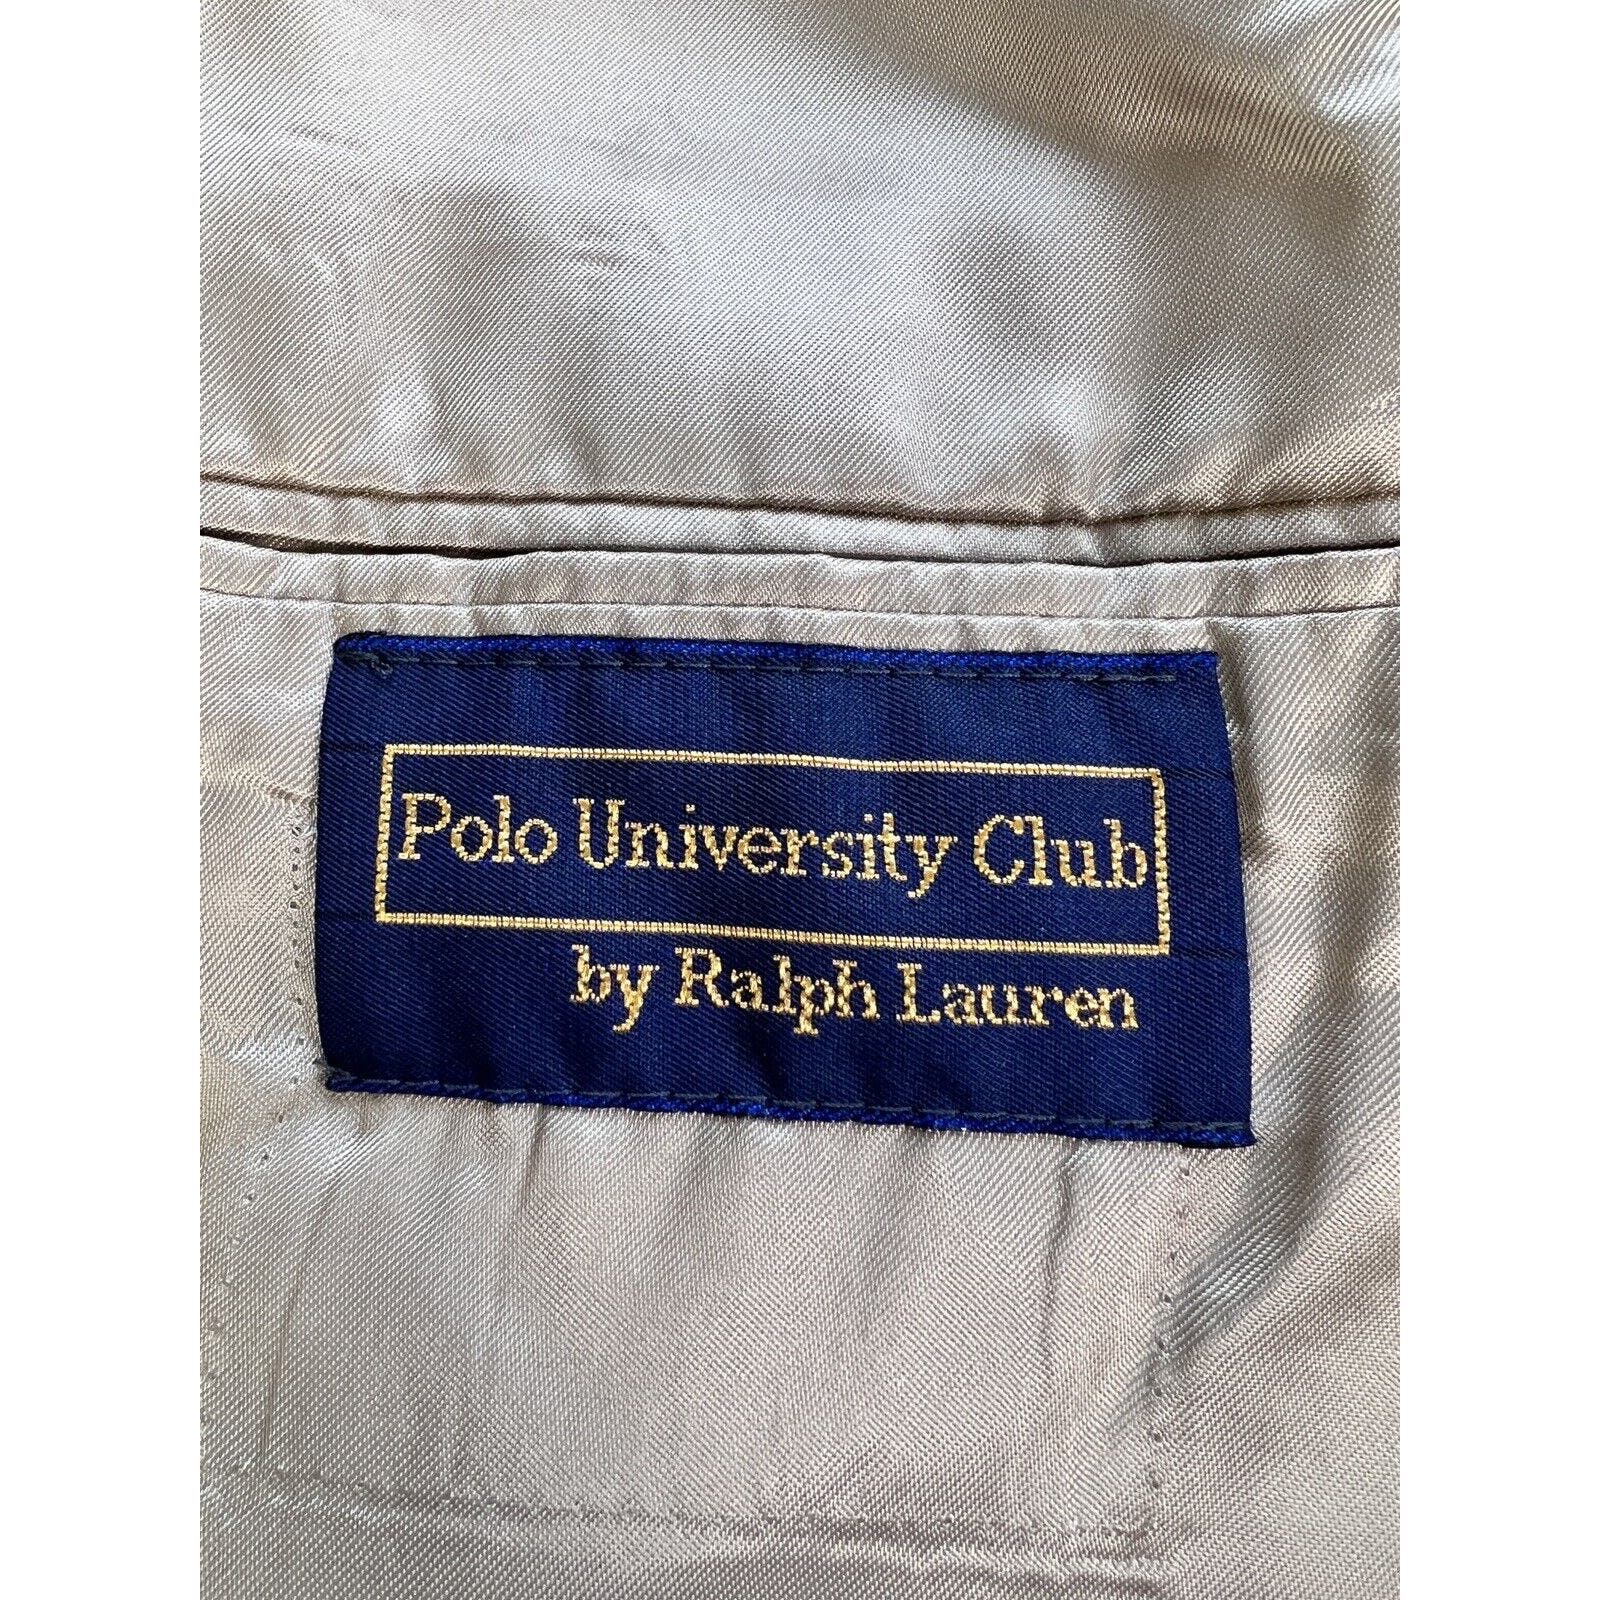 Ralph Lauren Polo University Club 3 Button Blazer 44L Sport Coat Jacket Brown